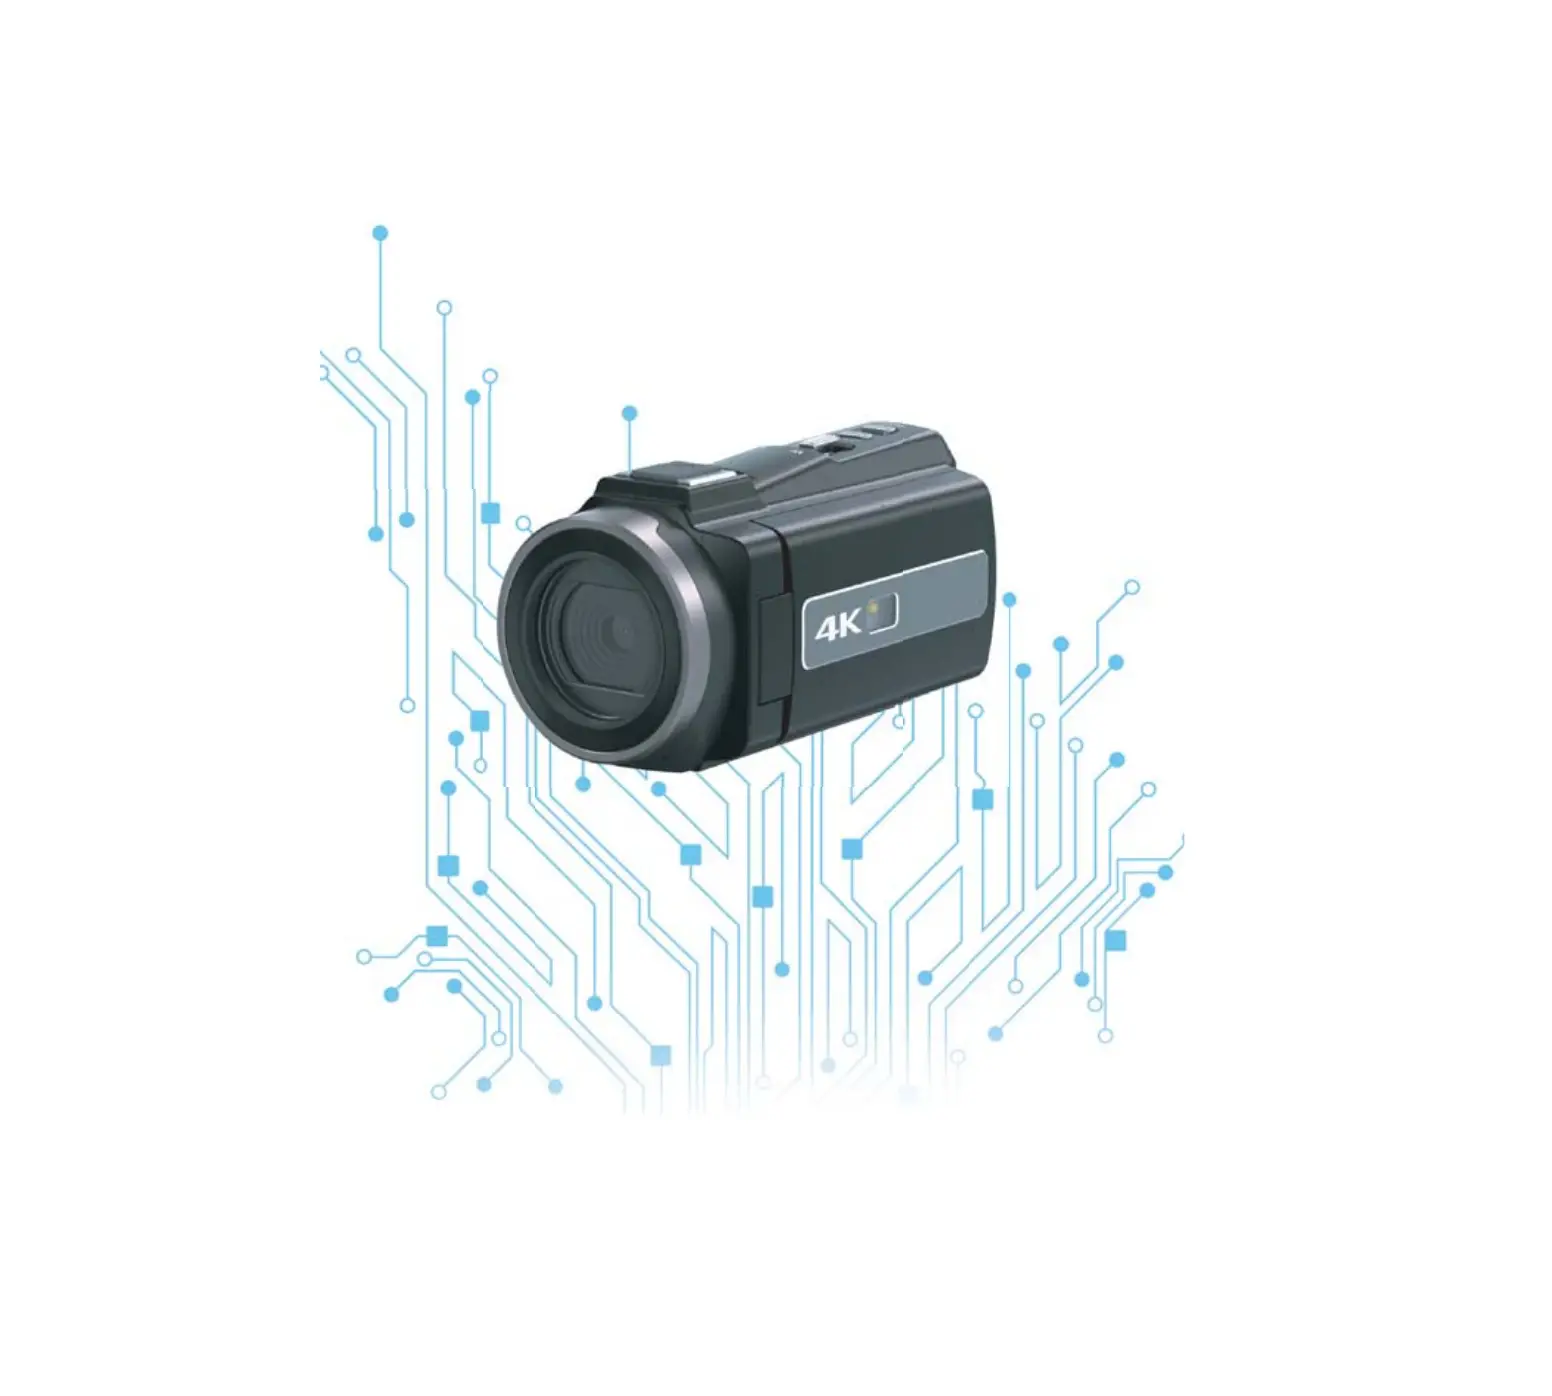 Shenzhen Sonida Digital Tcehnology HDV-544KM 4K Video Camera User Manual - Manualsee